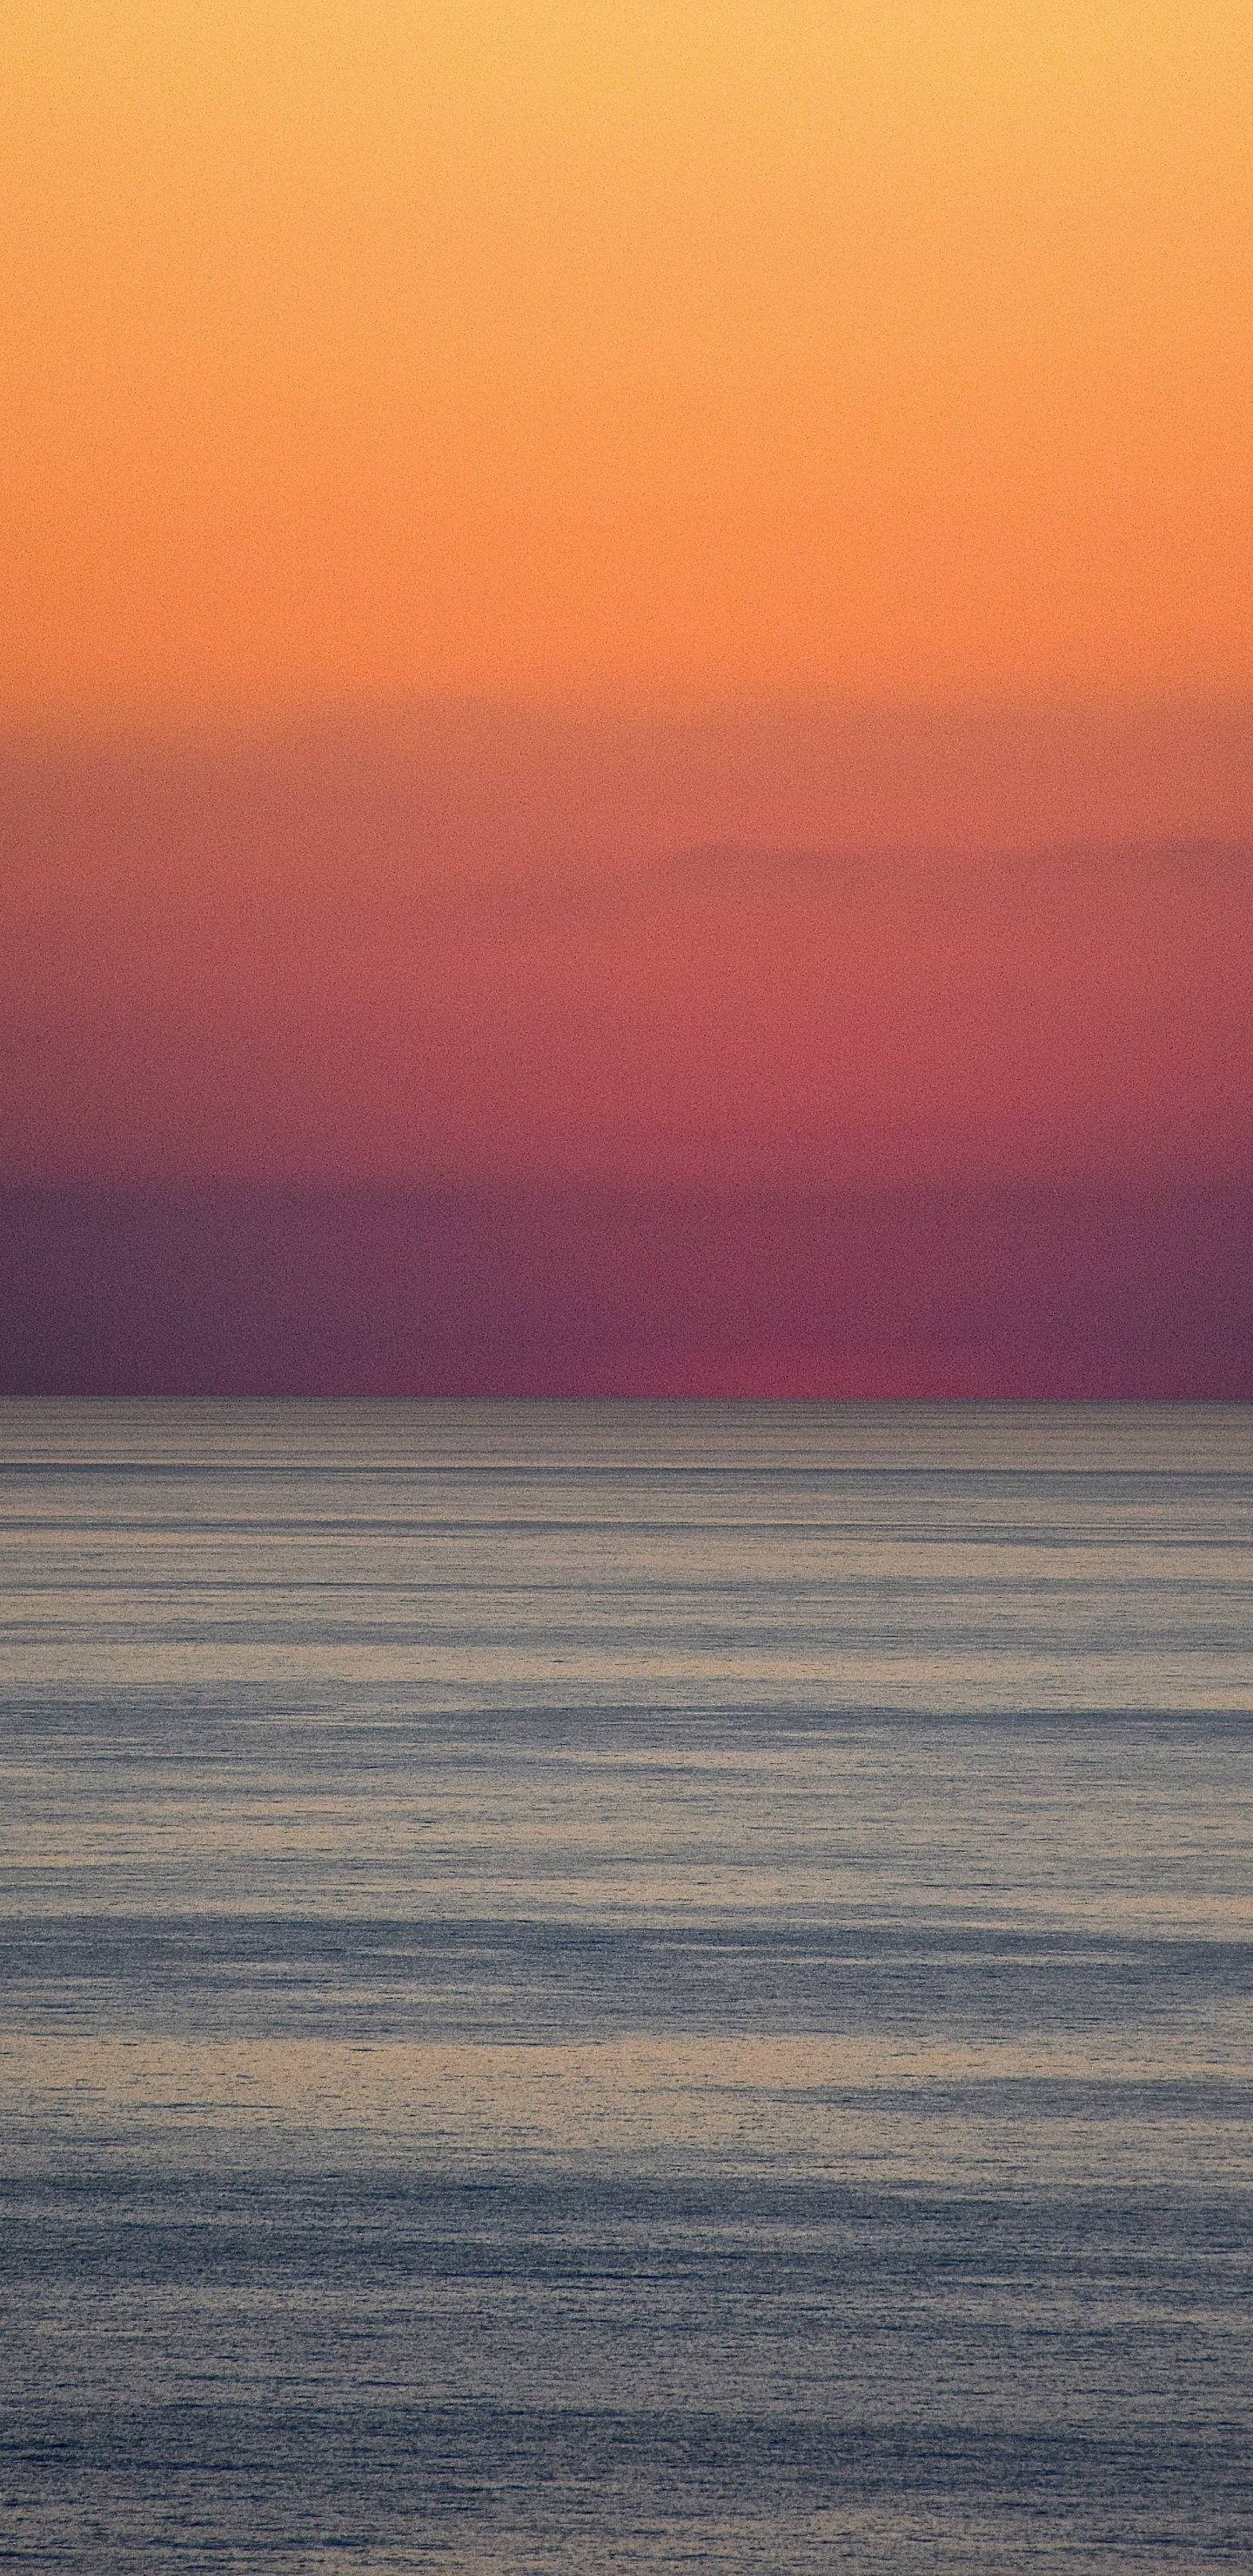 Sea, calm, sunset, body of water, blur, 1440x2960 wallpaper